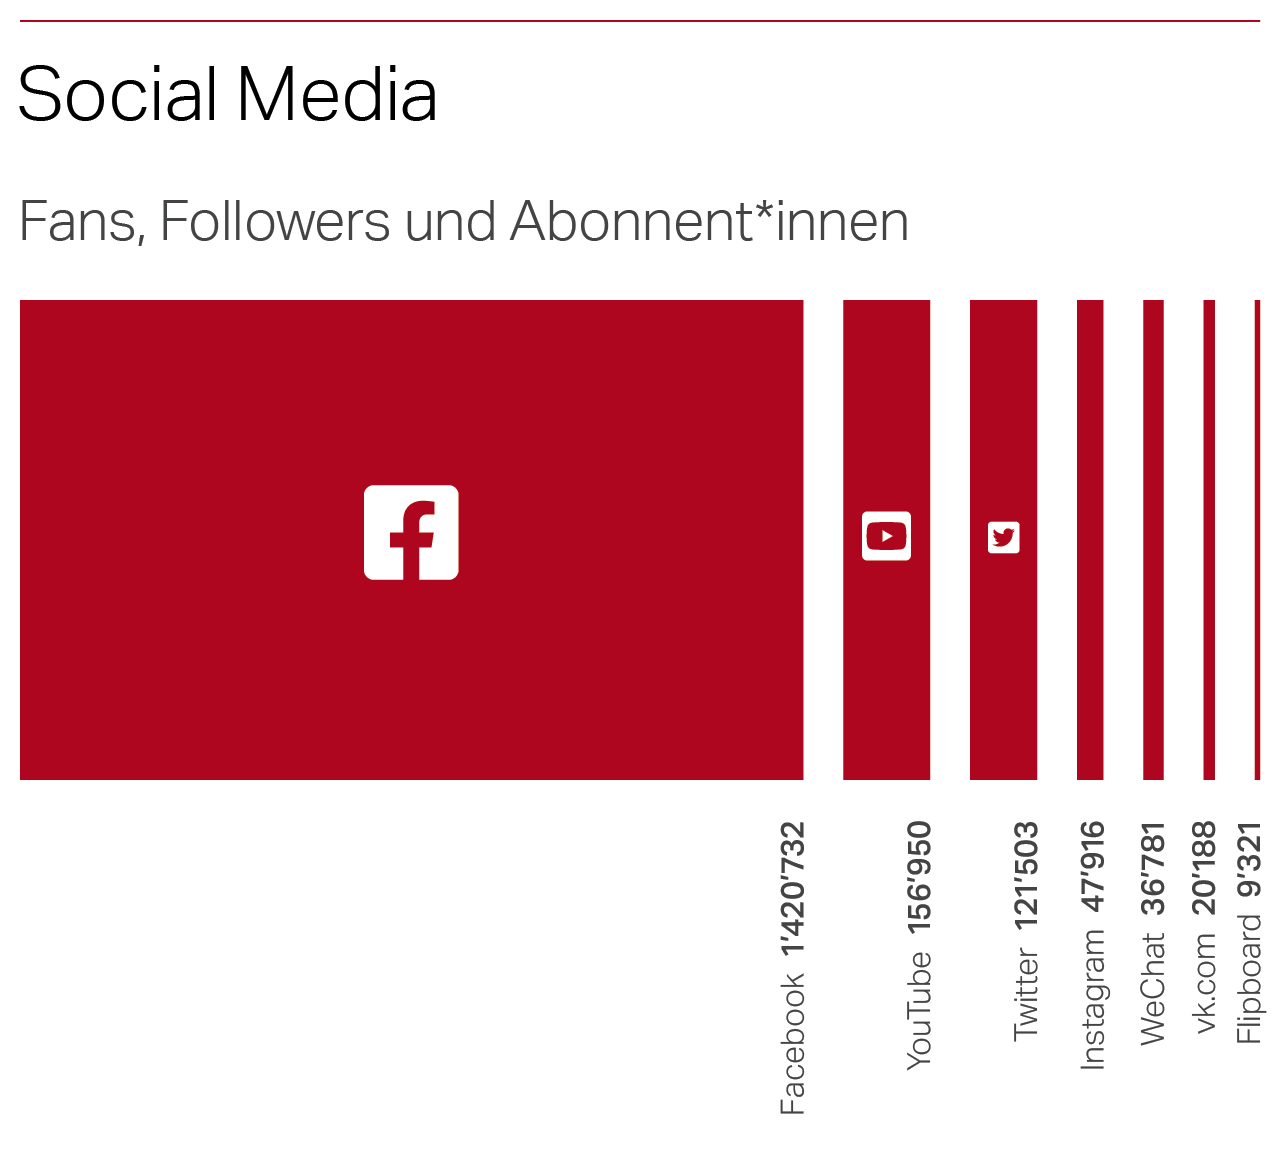 Social Media Statistik 2020